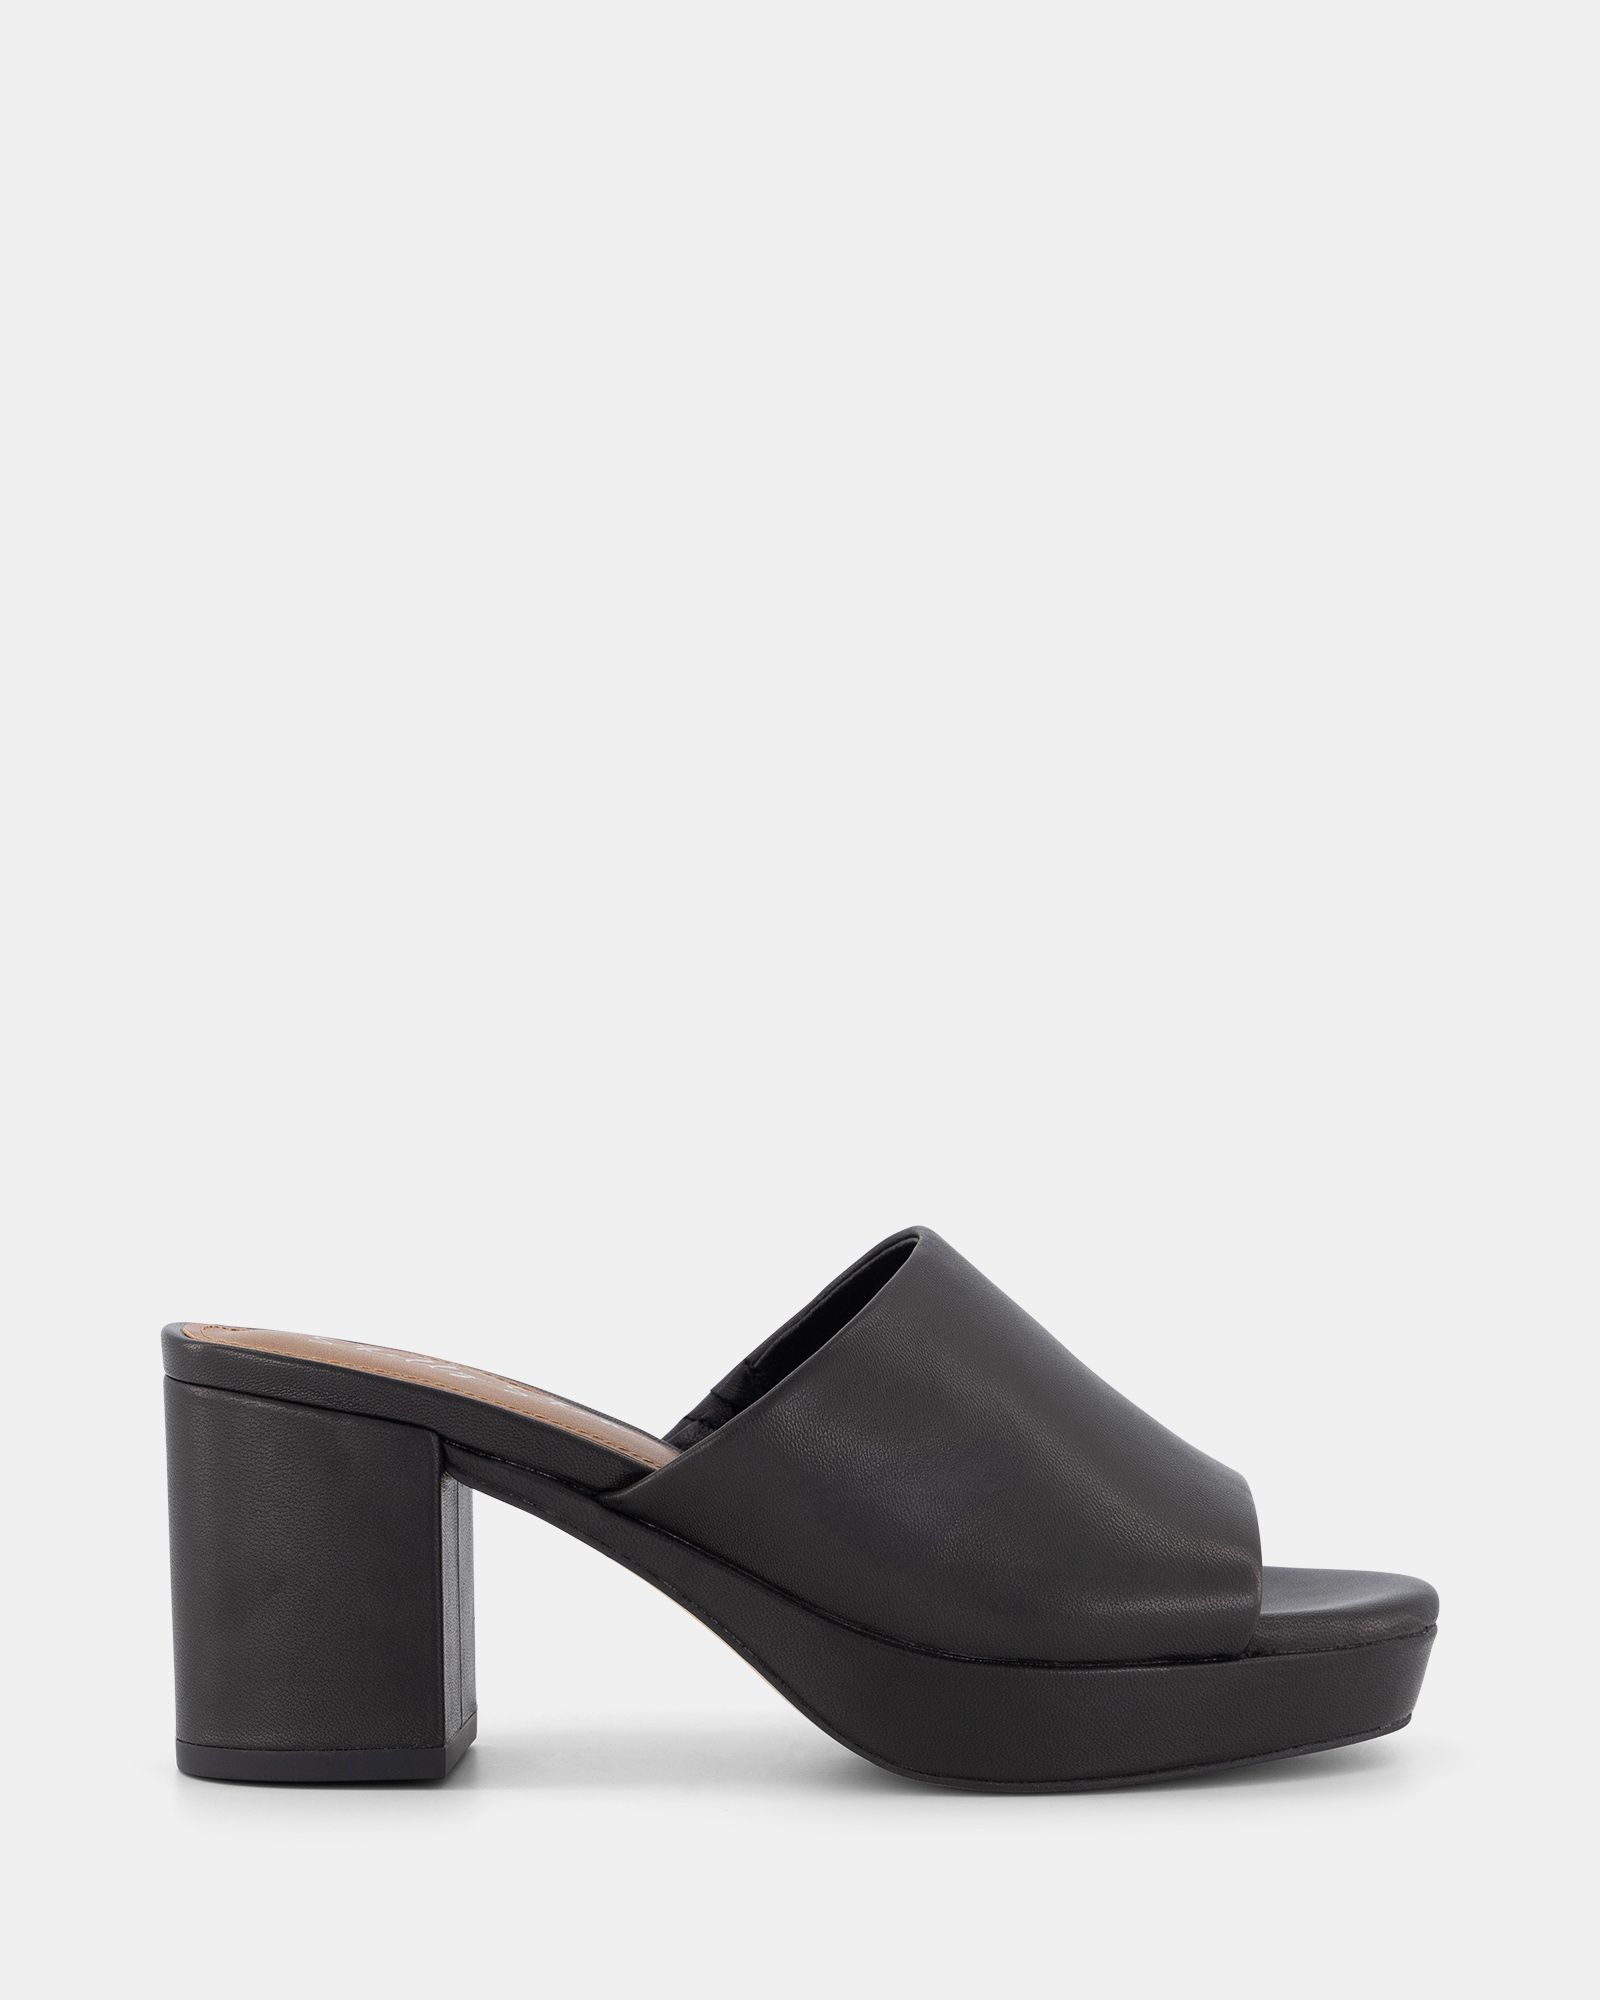 Buy MCKENNA Black heels Online at Shoe Connection